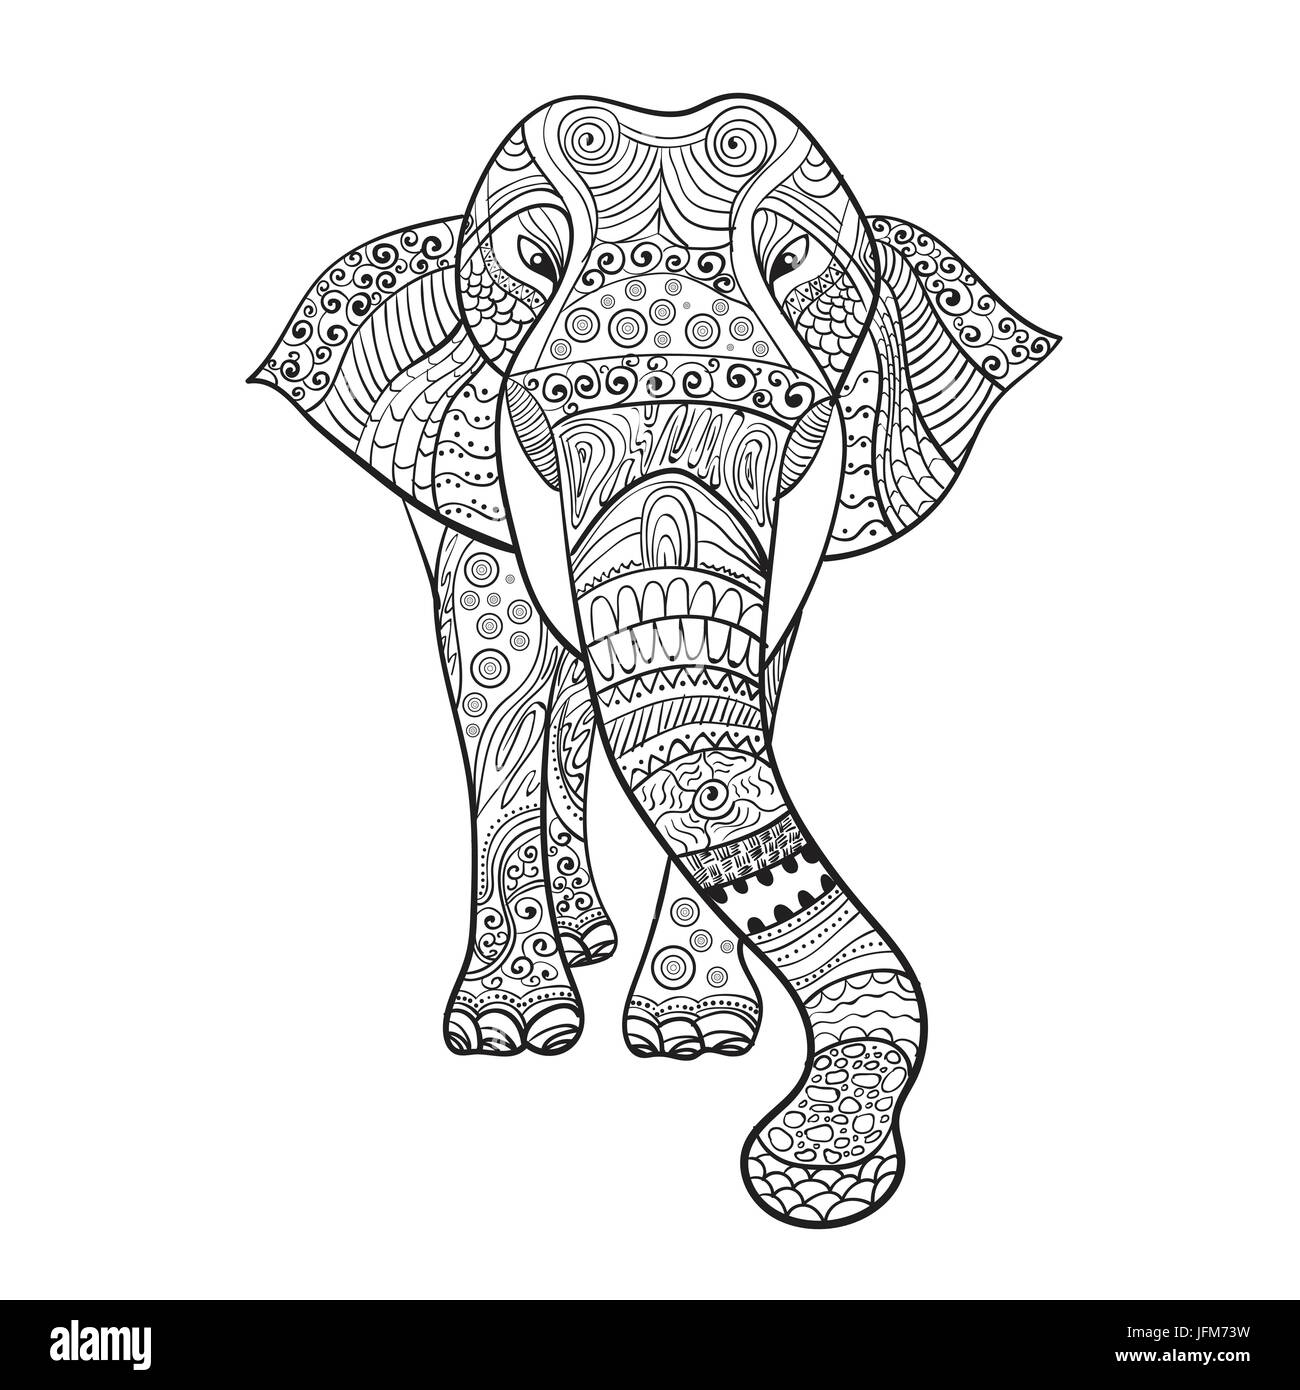 Elaphant Zentangle Animal For Coloring Book Stock Vector